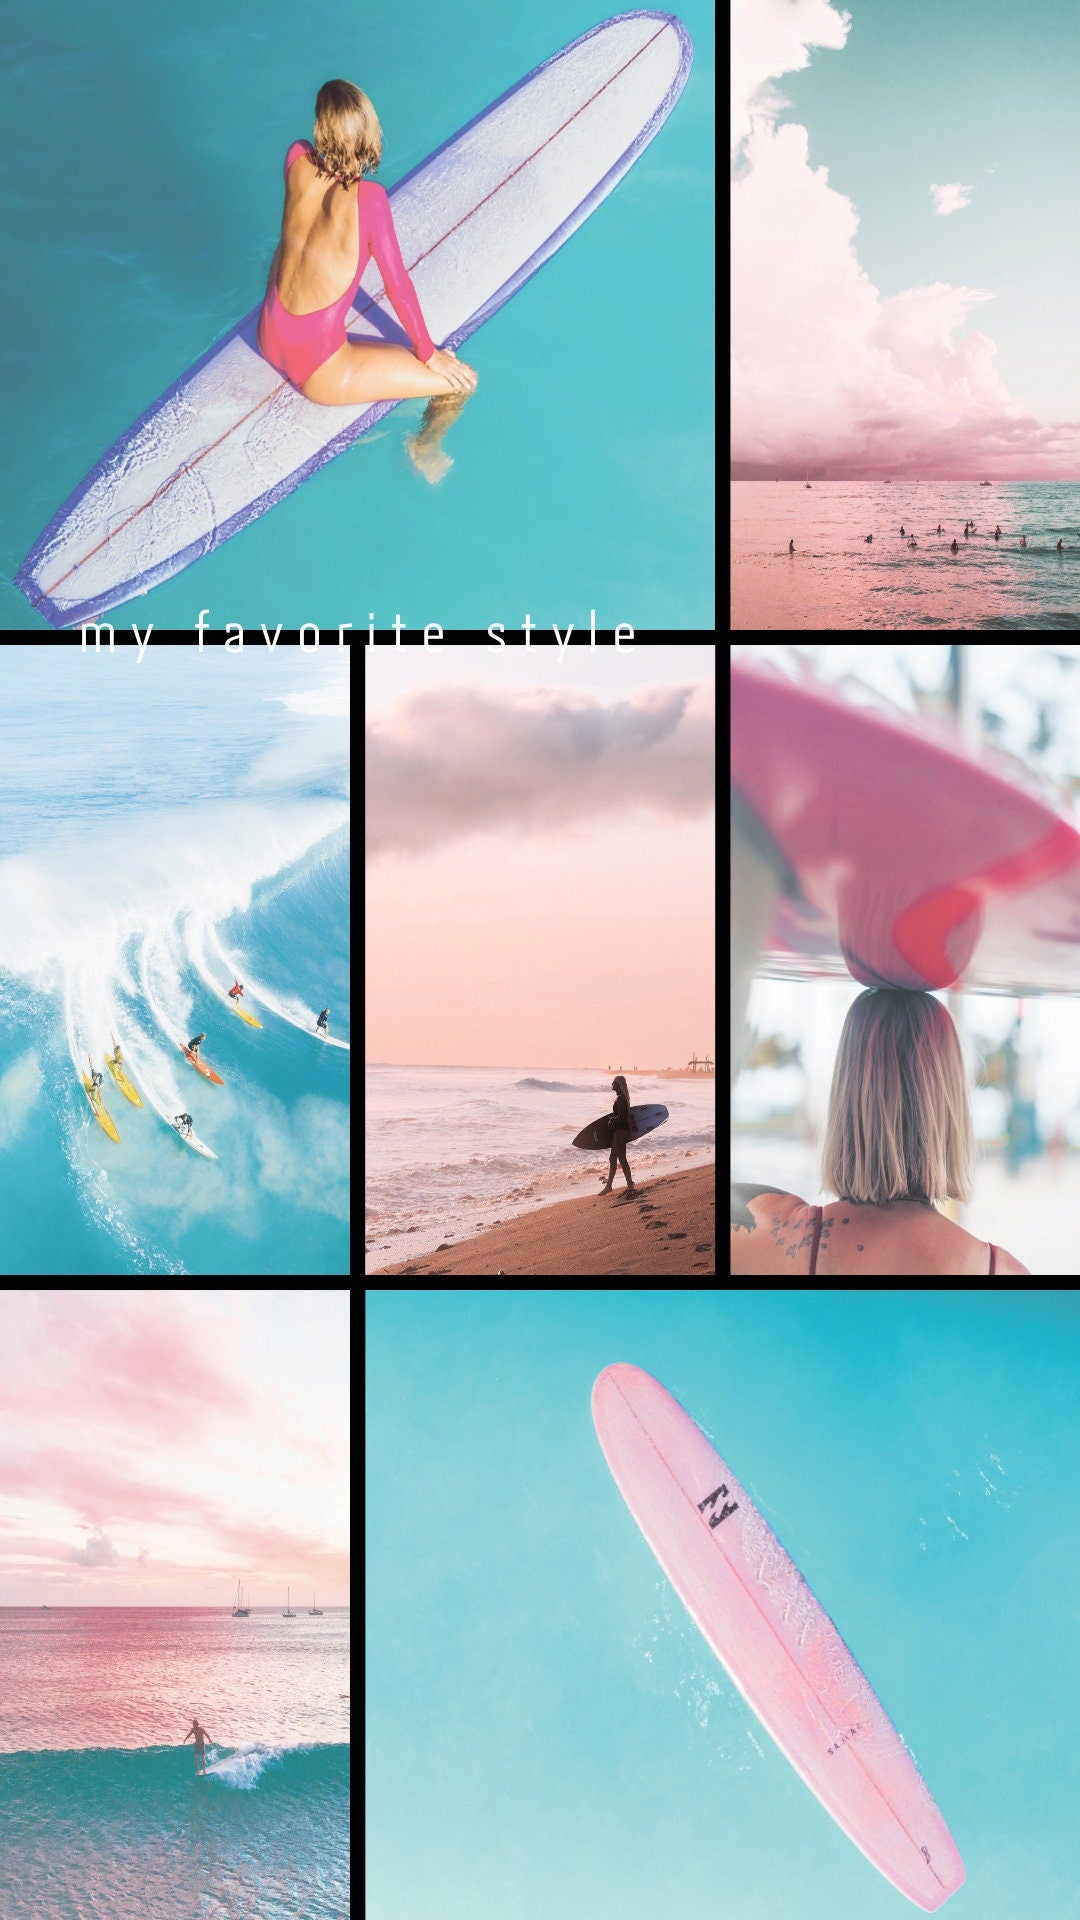 100 PCS Surf collage kit DIGITAL PRINT, Surfer decor, Surfer art, Surfs up, Gifts for surfers, Surfer print, surfboard, aesthetic room decor